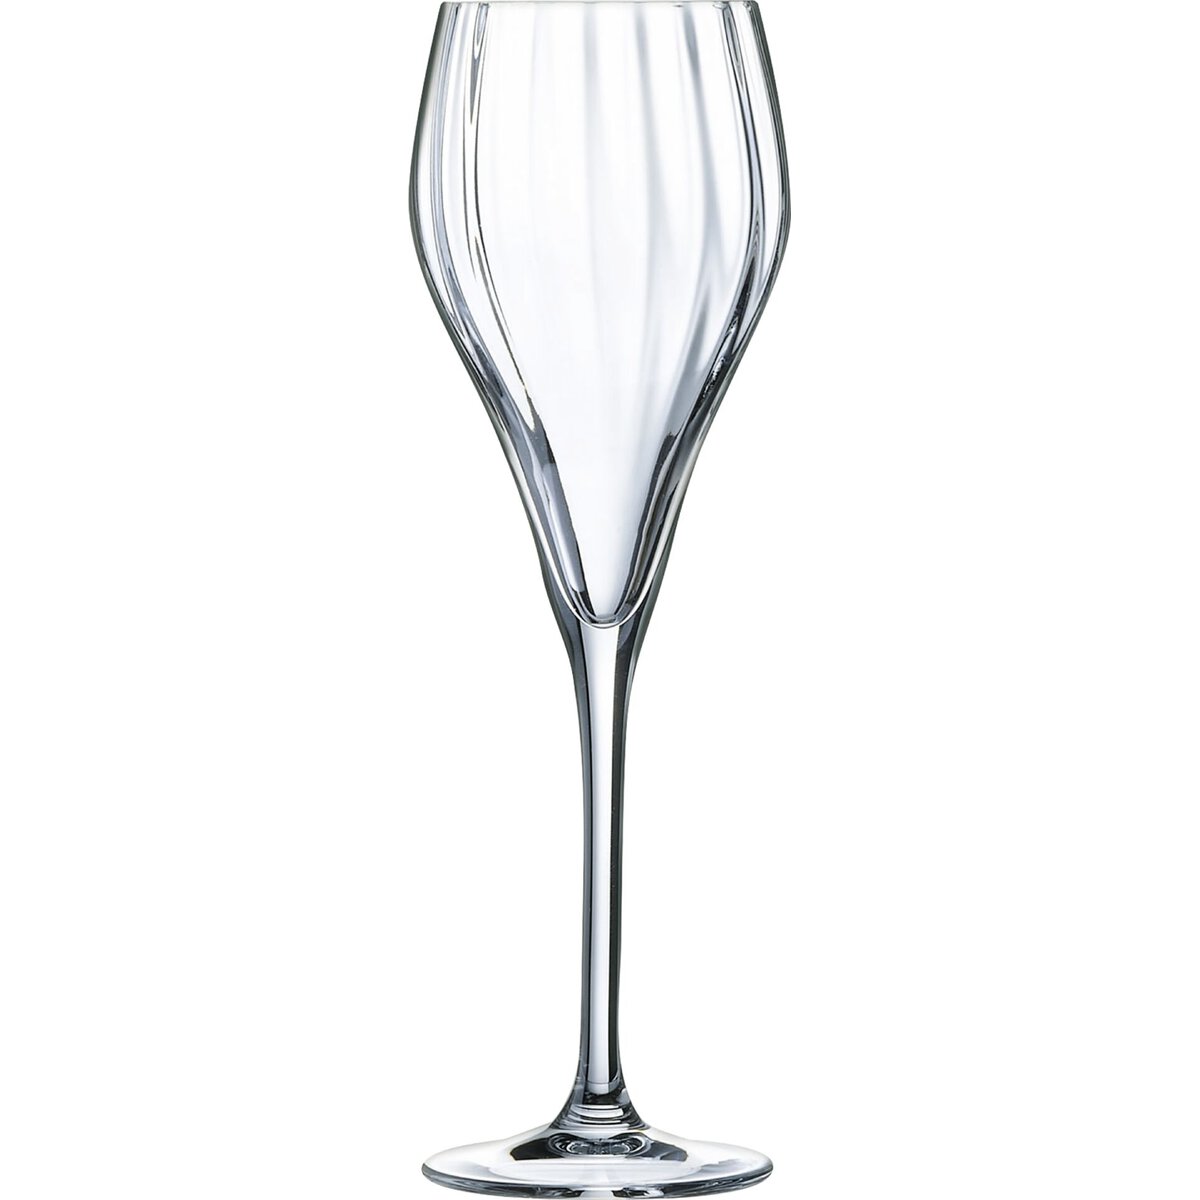 Glasserie "Symetrie" Champagnerglas 155ml (2)